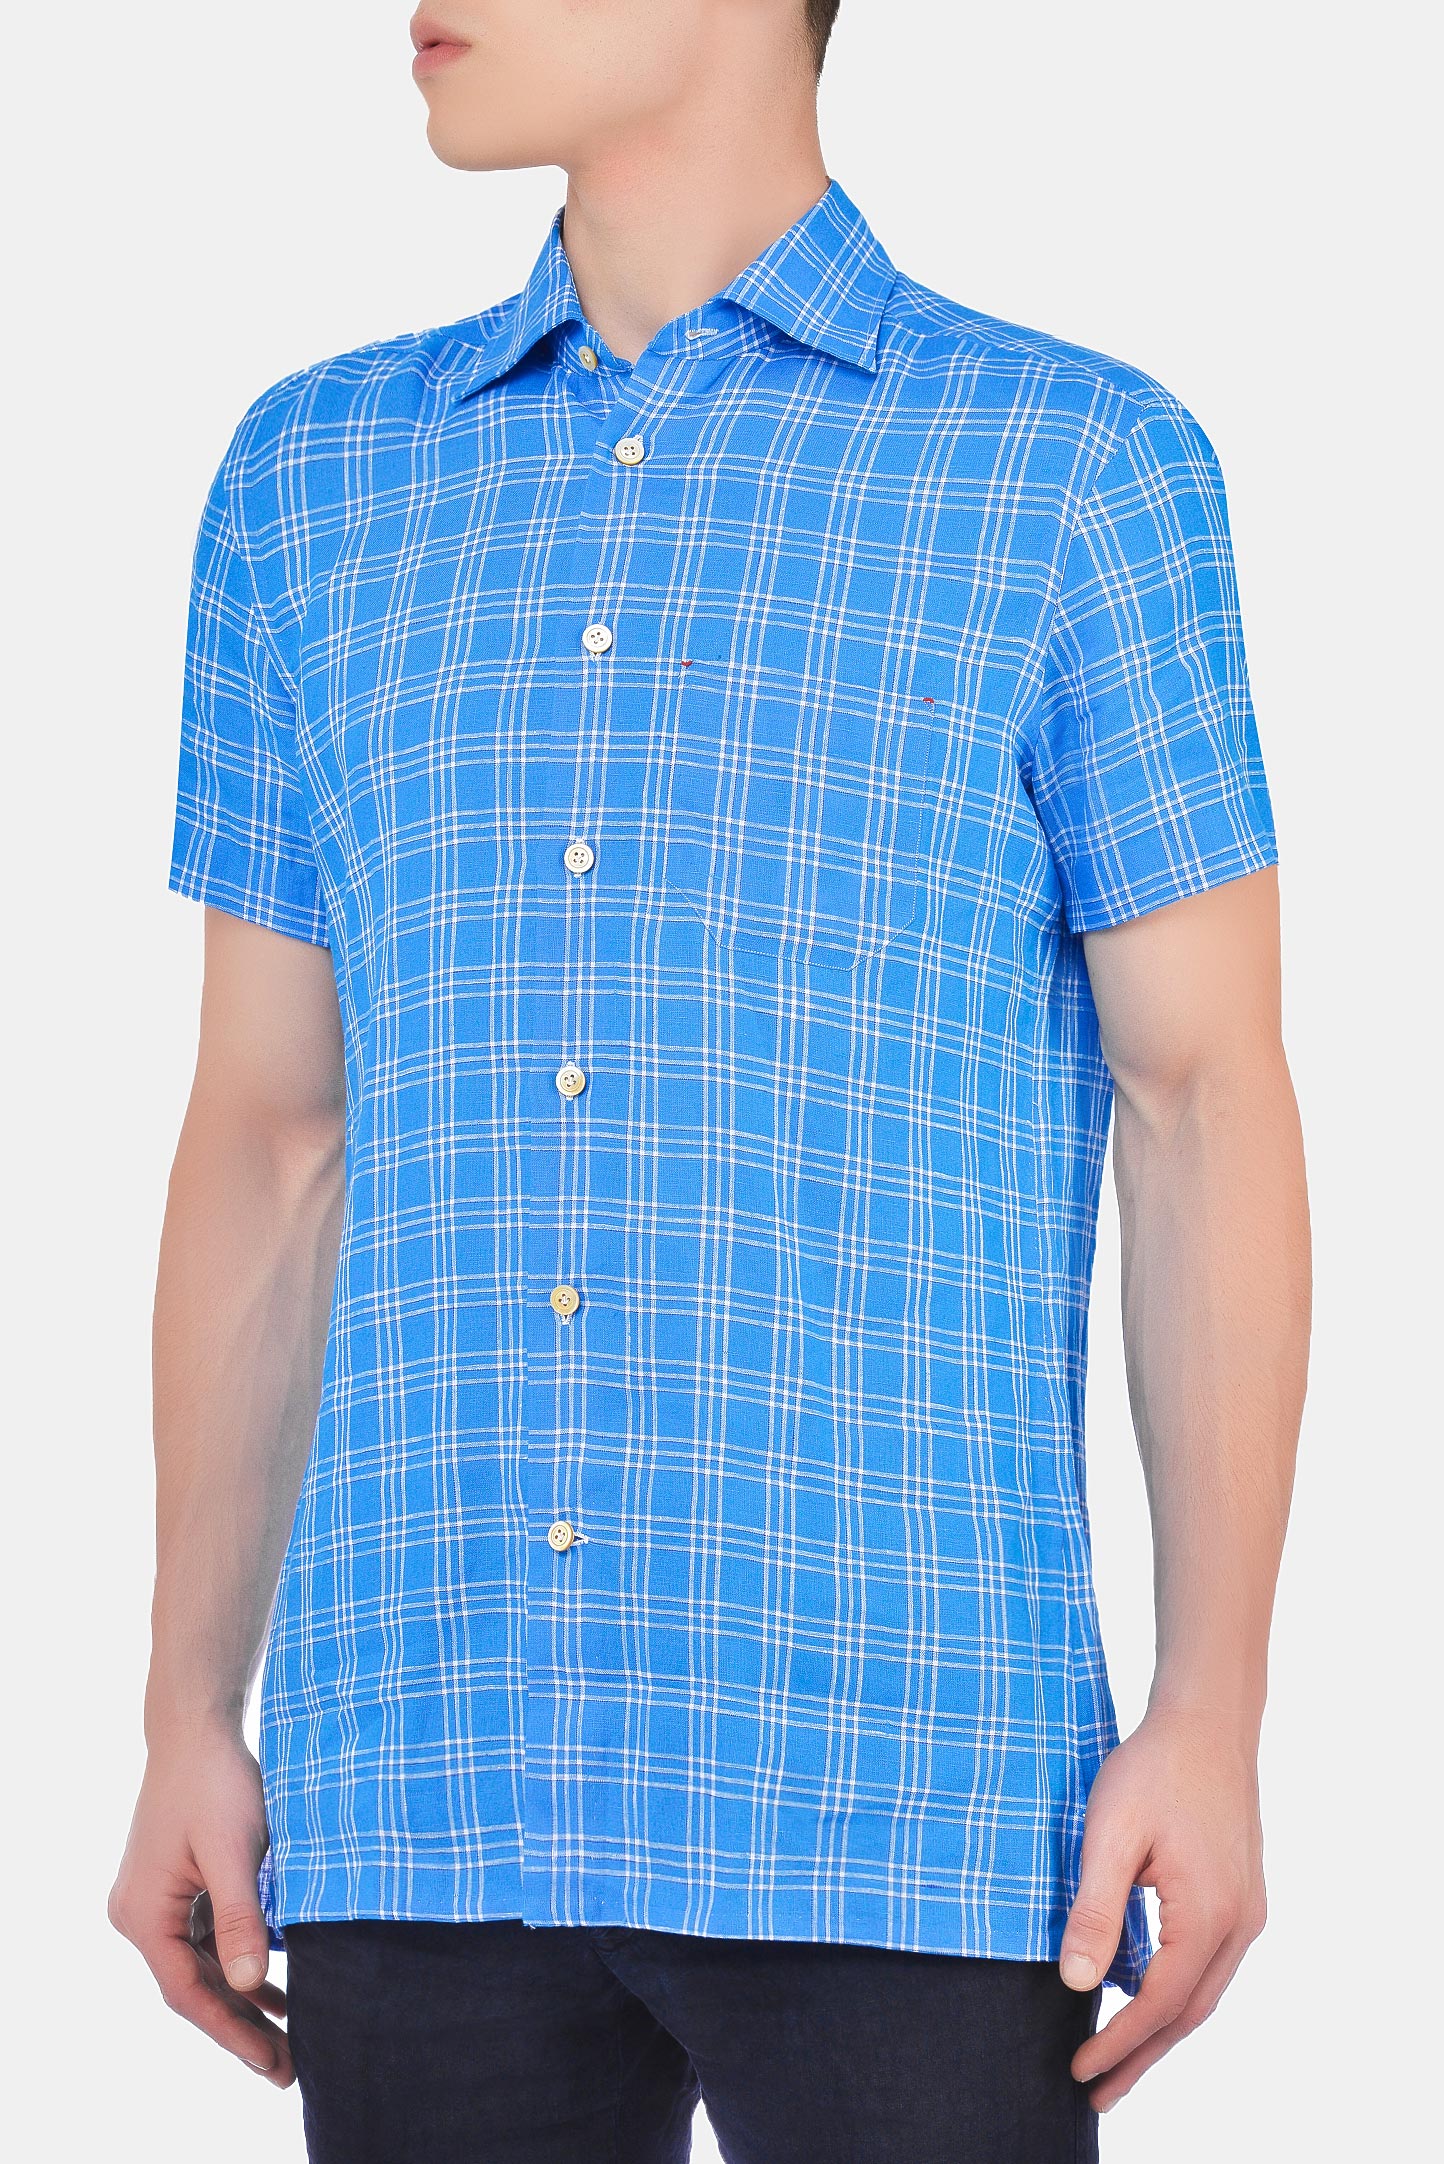 Рубашка KITON UMCNERH076990, цвет: Голубой, Мужской